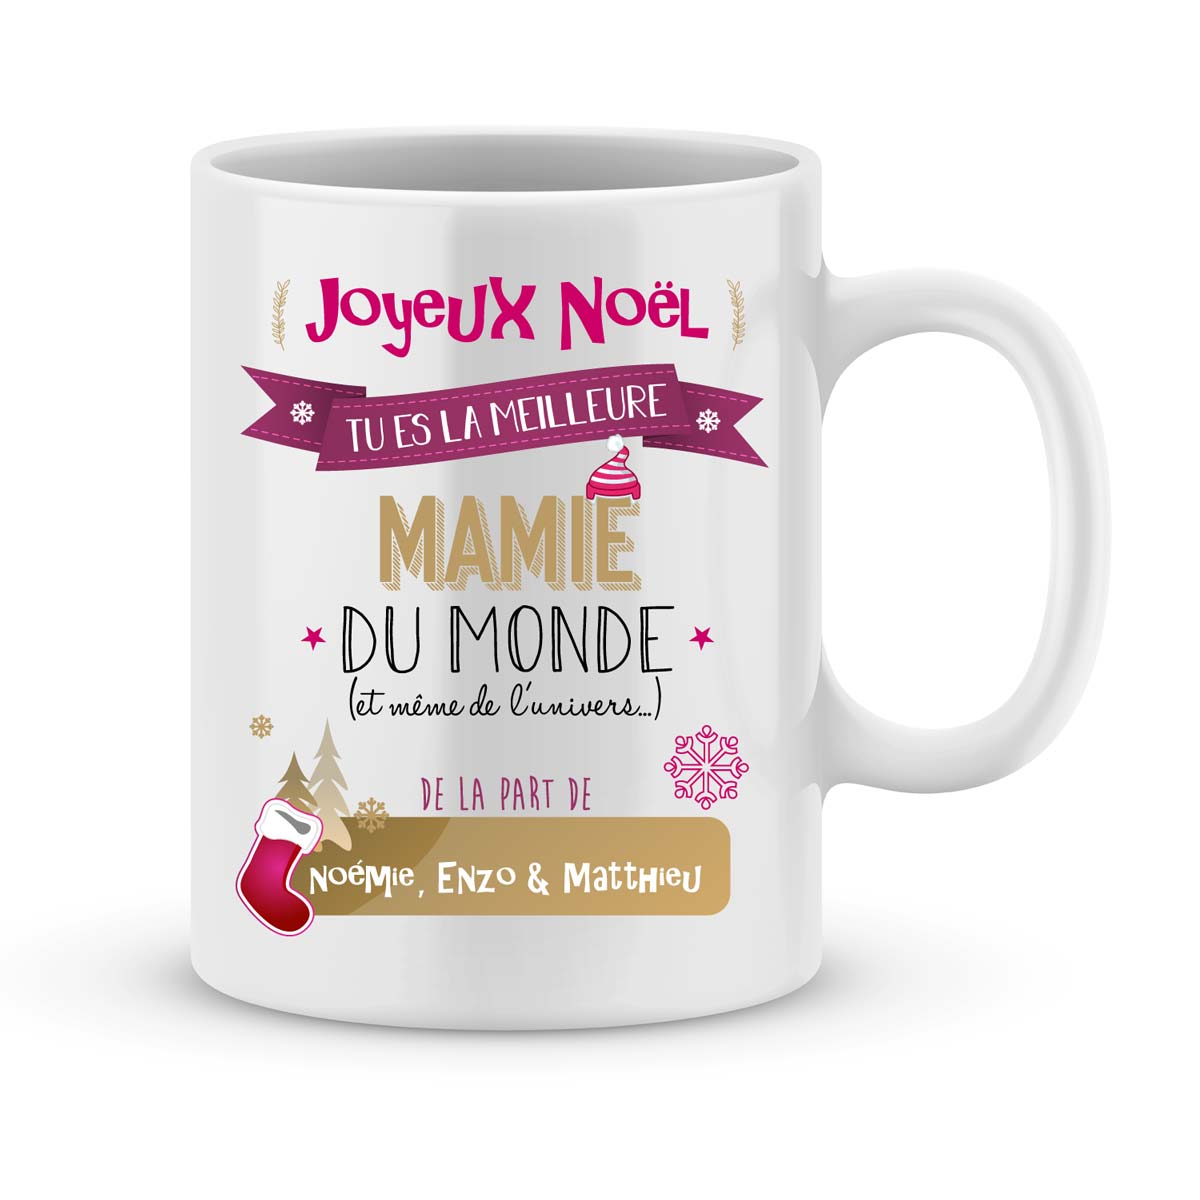 https://www.jolimug.fr/wp-content/uploads/2019/11/mug-personnalise-prenom-photo-mamie-cadeau-noel-01-1.jpg